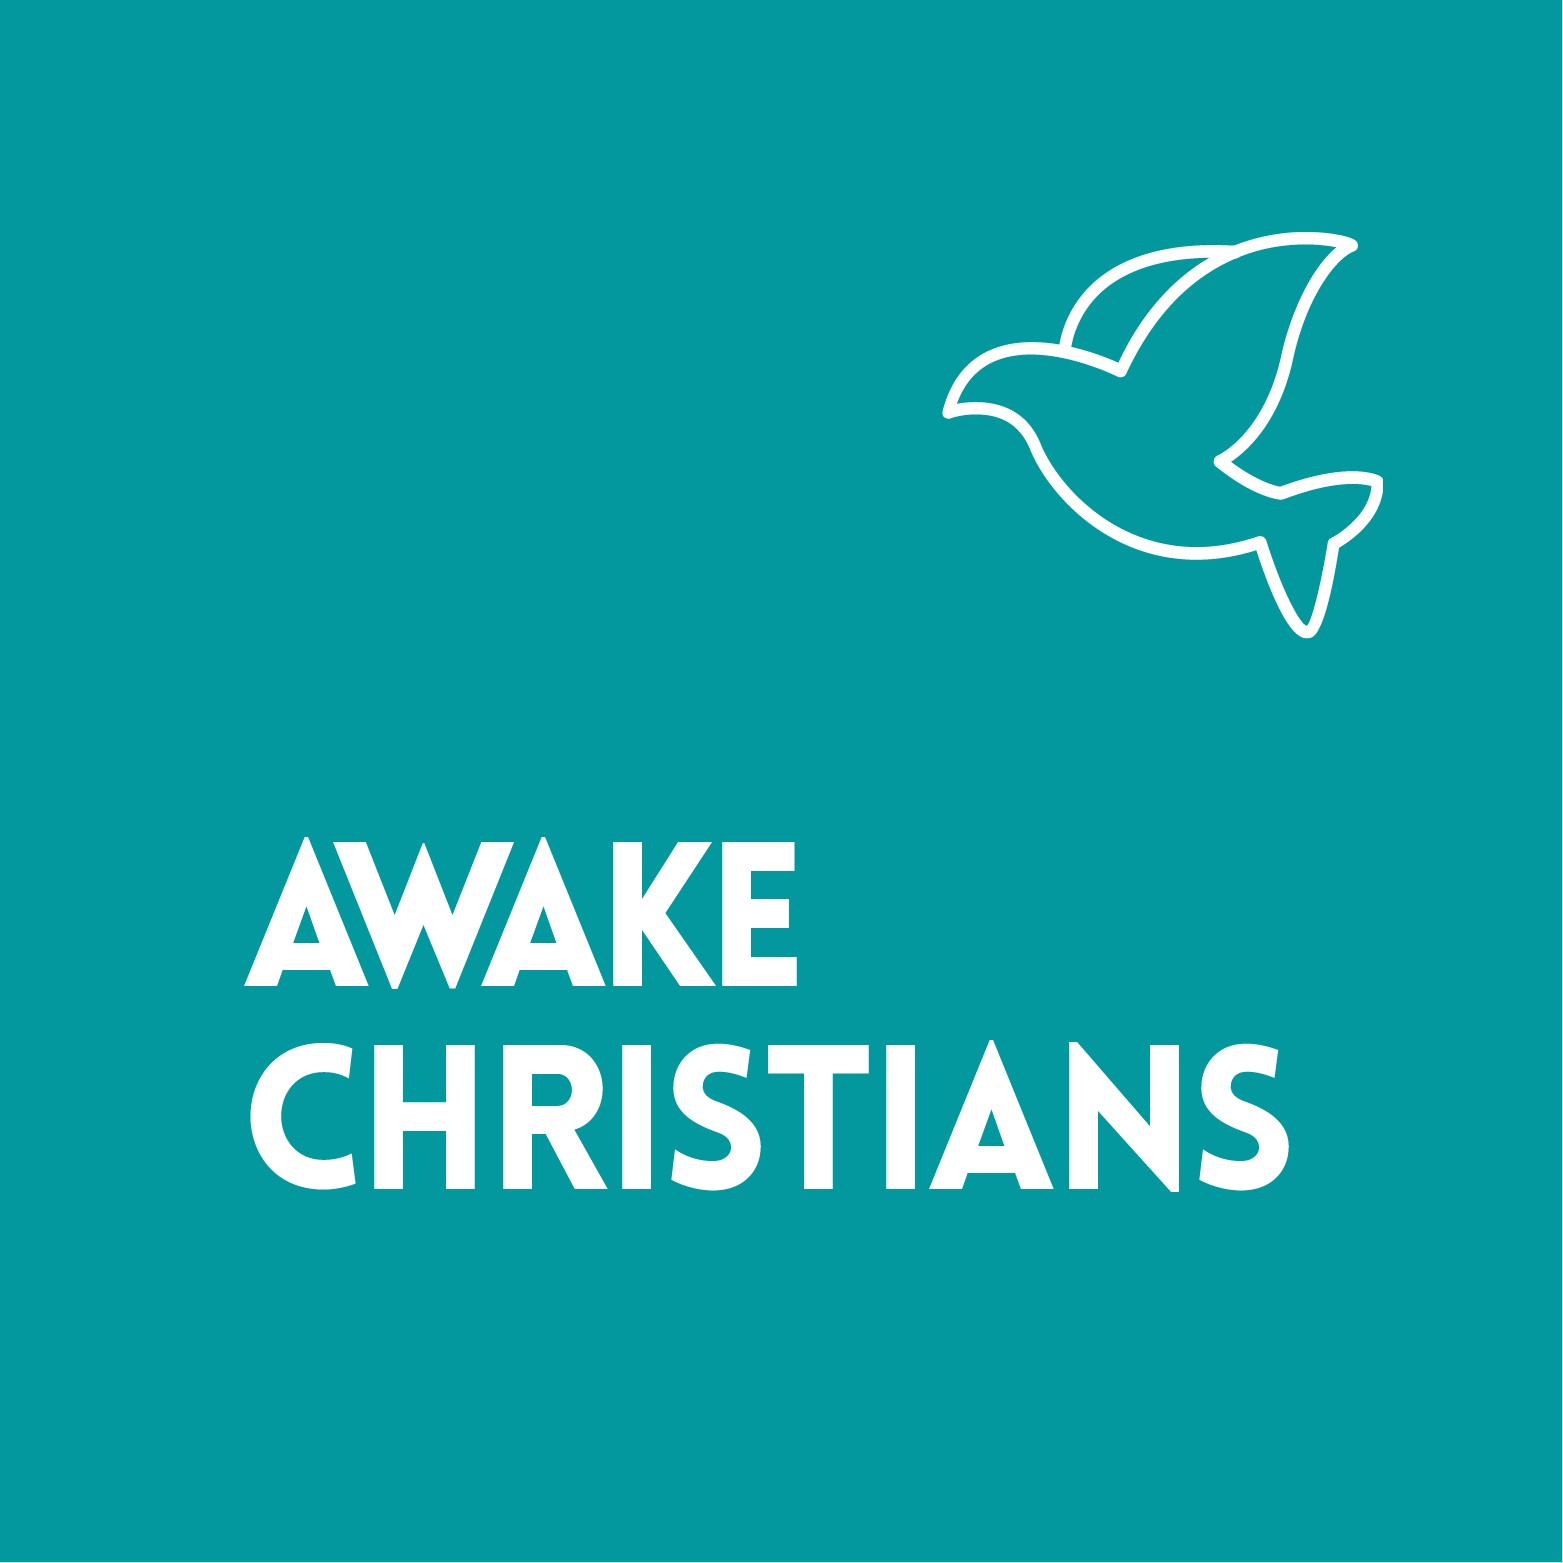 AWAKE CHRISTIANS